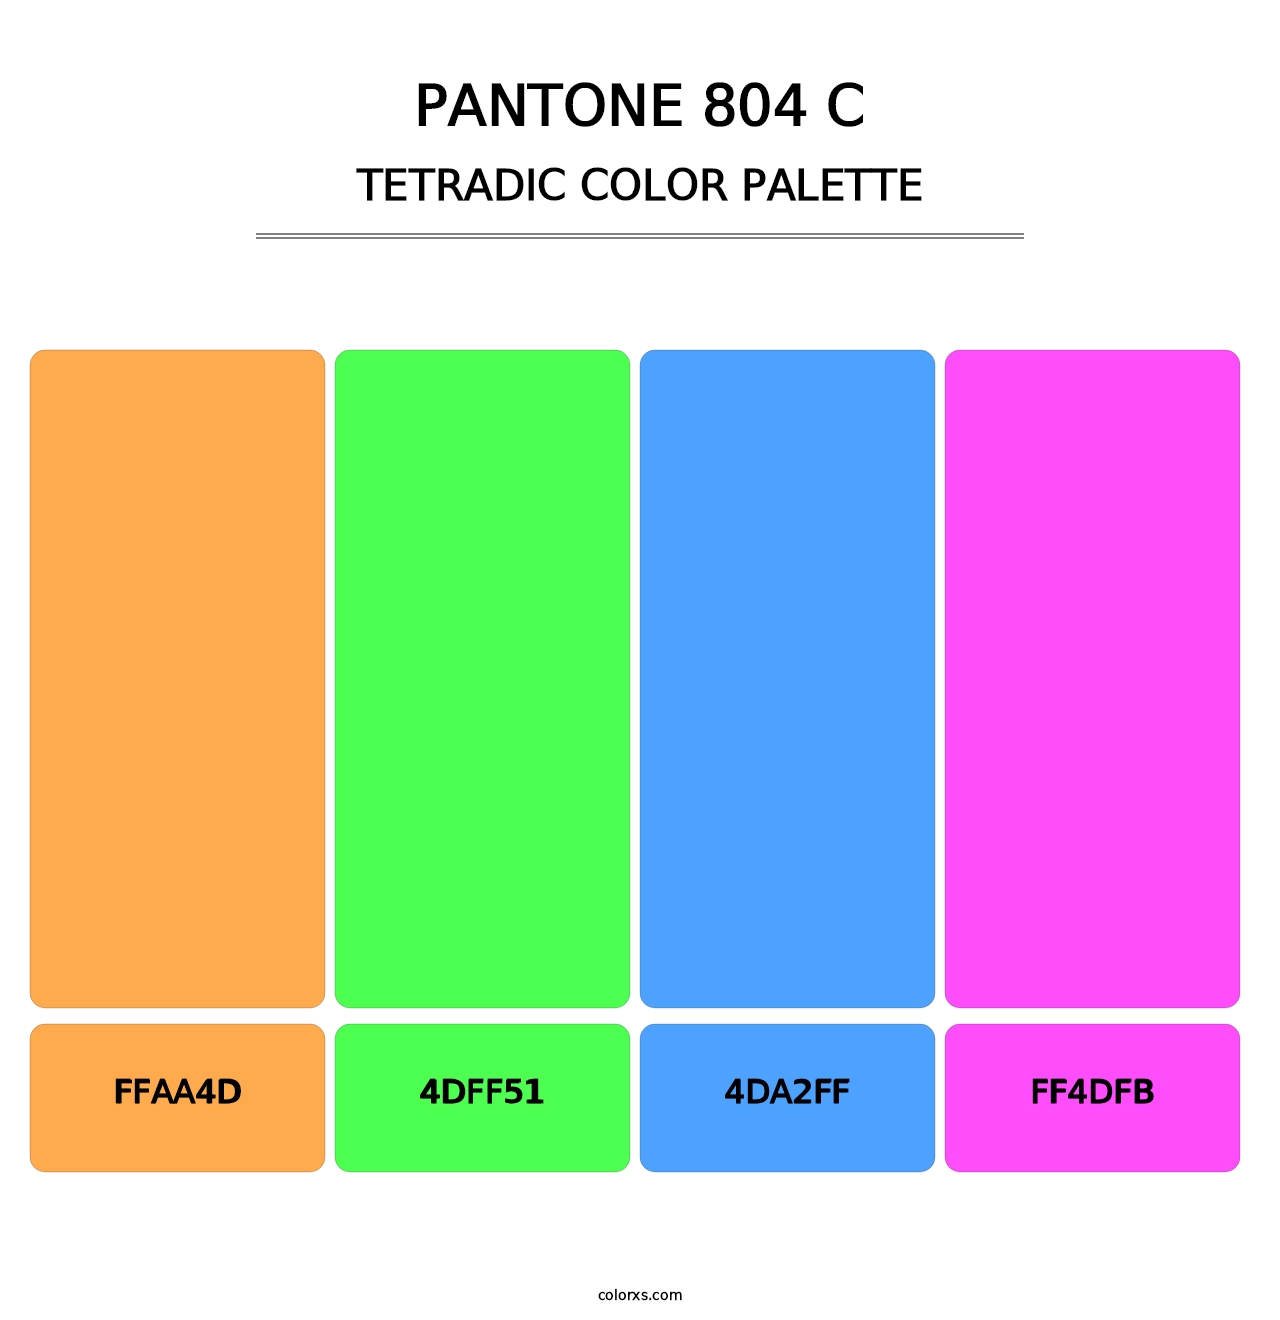 PANTONE 804 C - Tetradic Color Palette